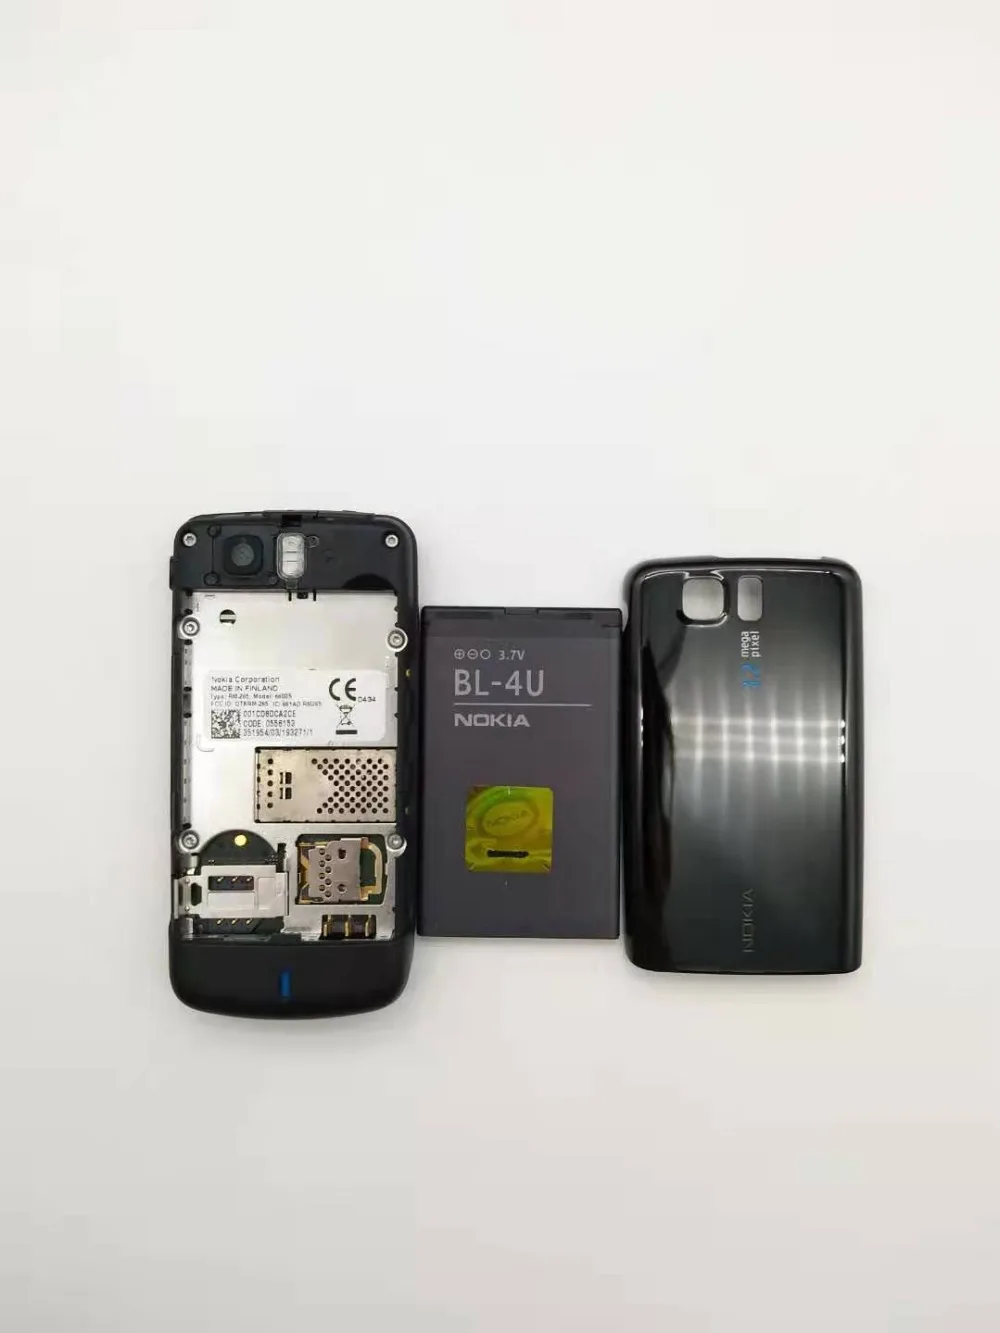 nokia 6600s refurbished original 6600 slide refurbished cell phone black color in stock refurbished free global shipping